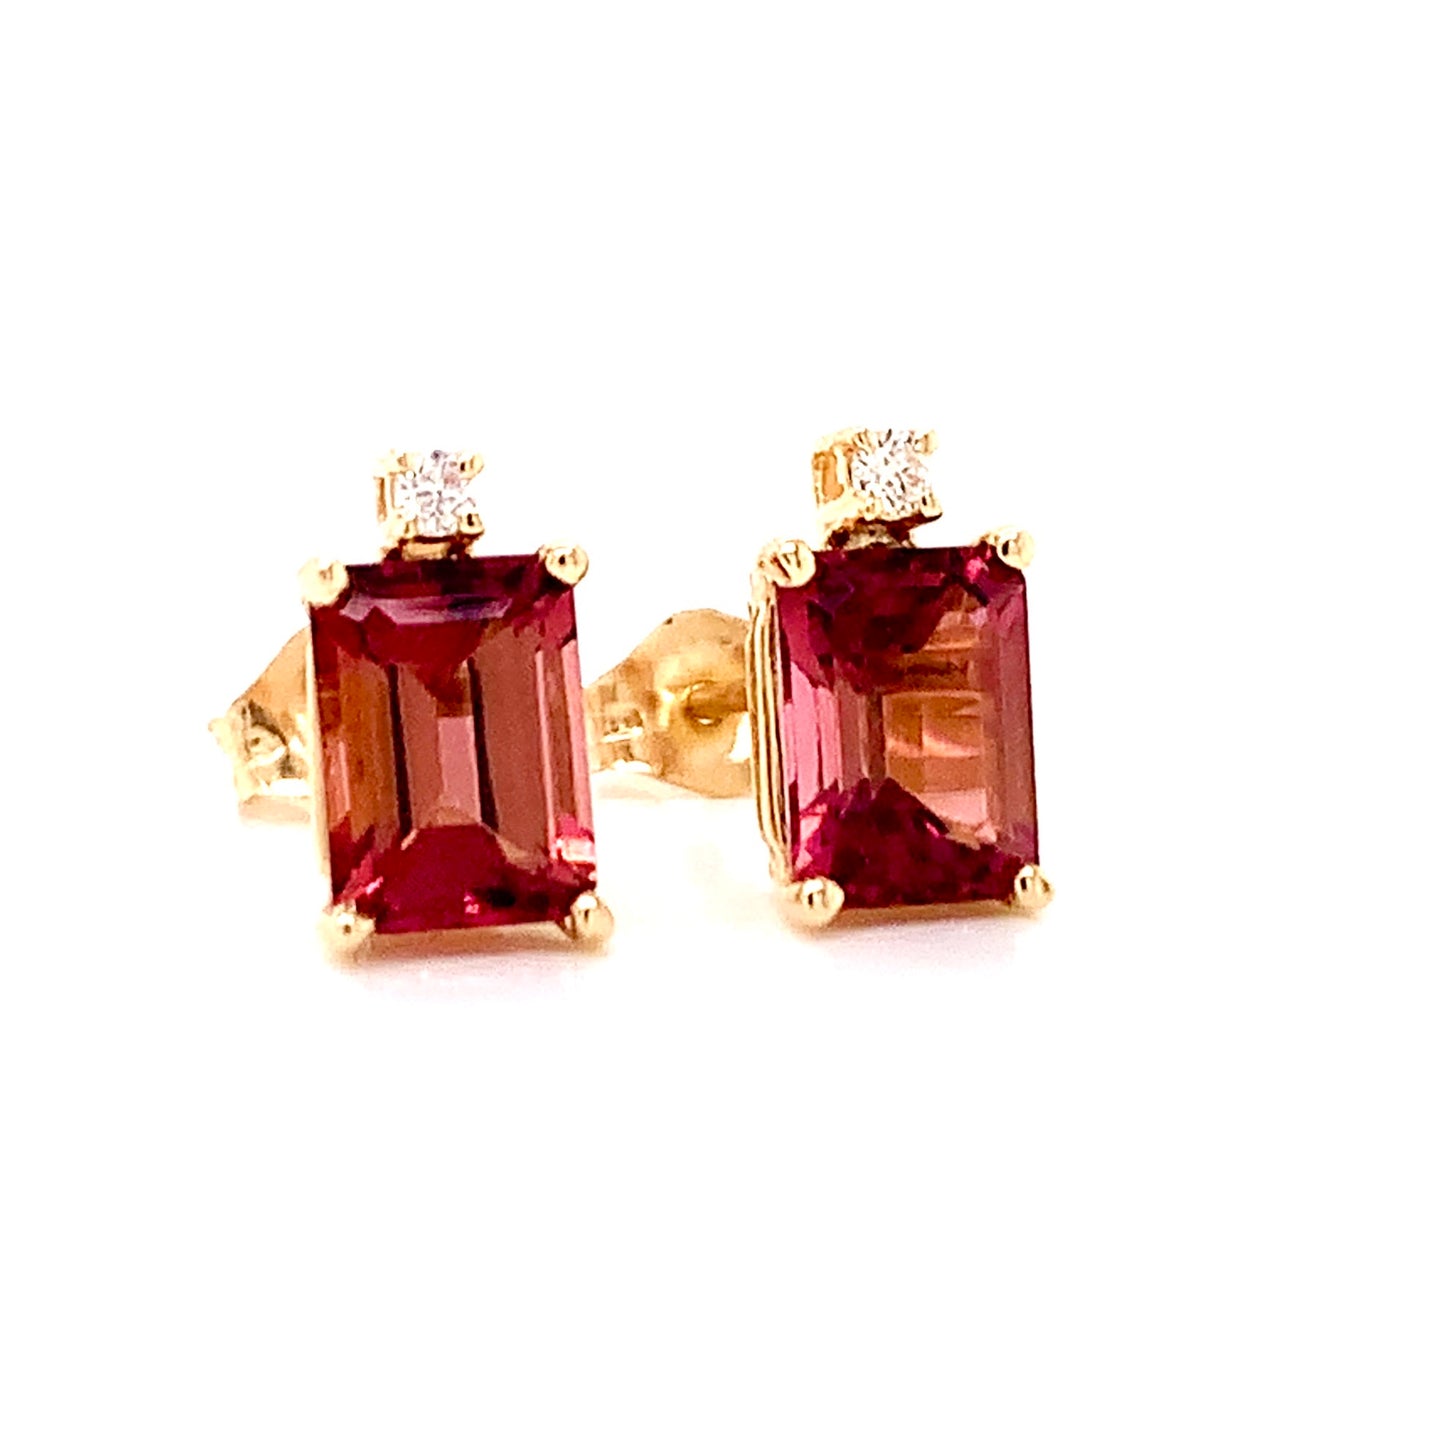 Natural Tourmaline Diamond Earrings 14k Gold 2.13 TCW Certified $1,950 018680 - Certified Fine Jewelry